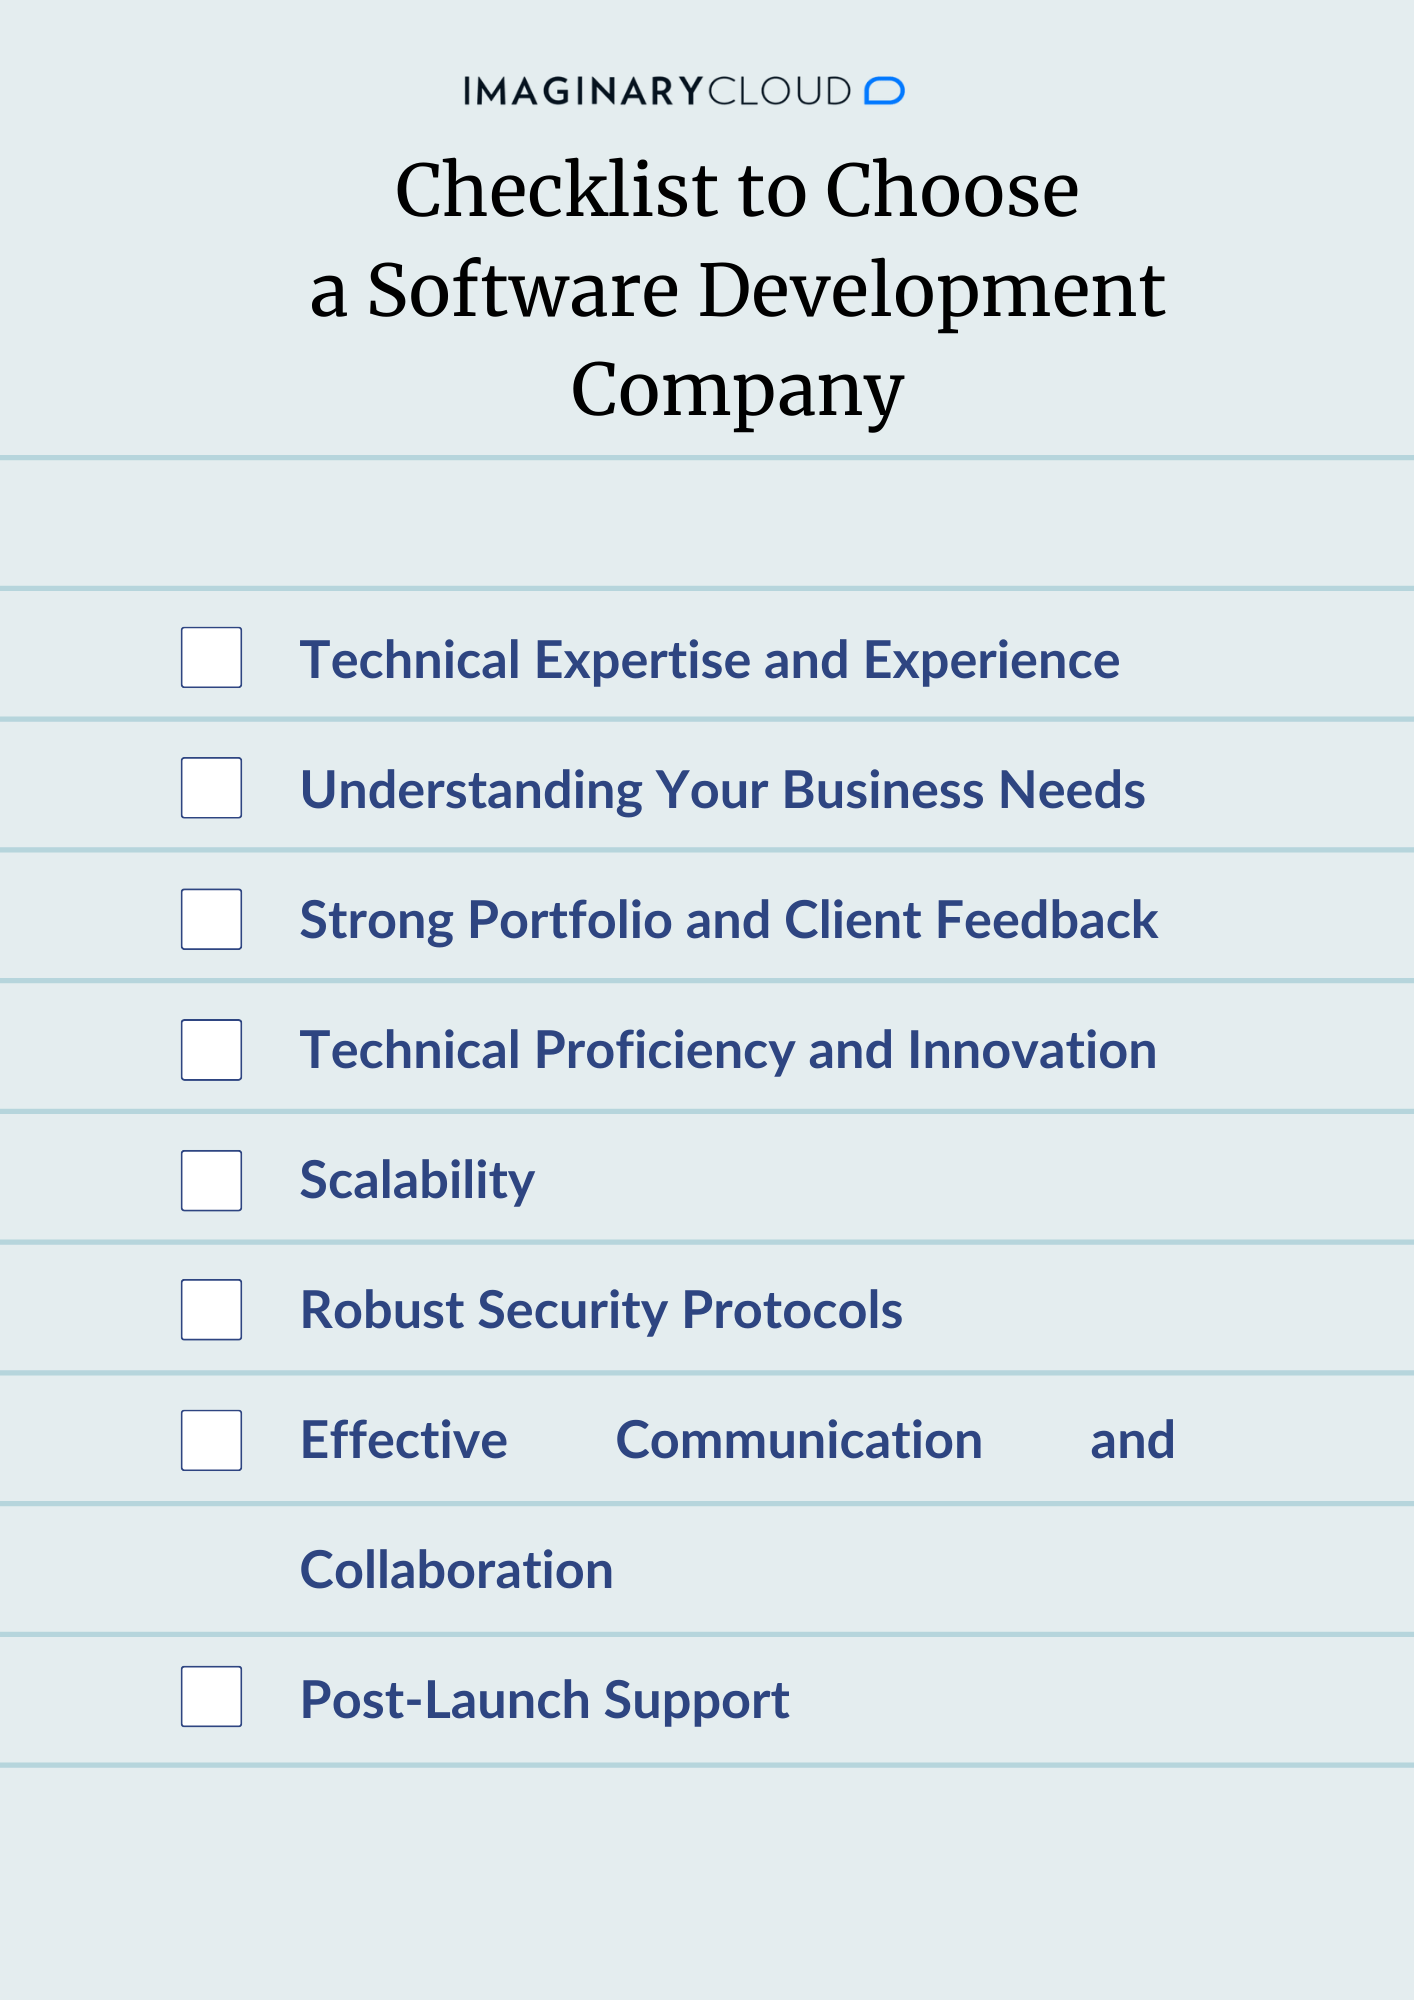 Checklist to Choose a Software Development Company